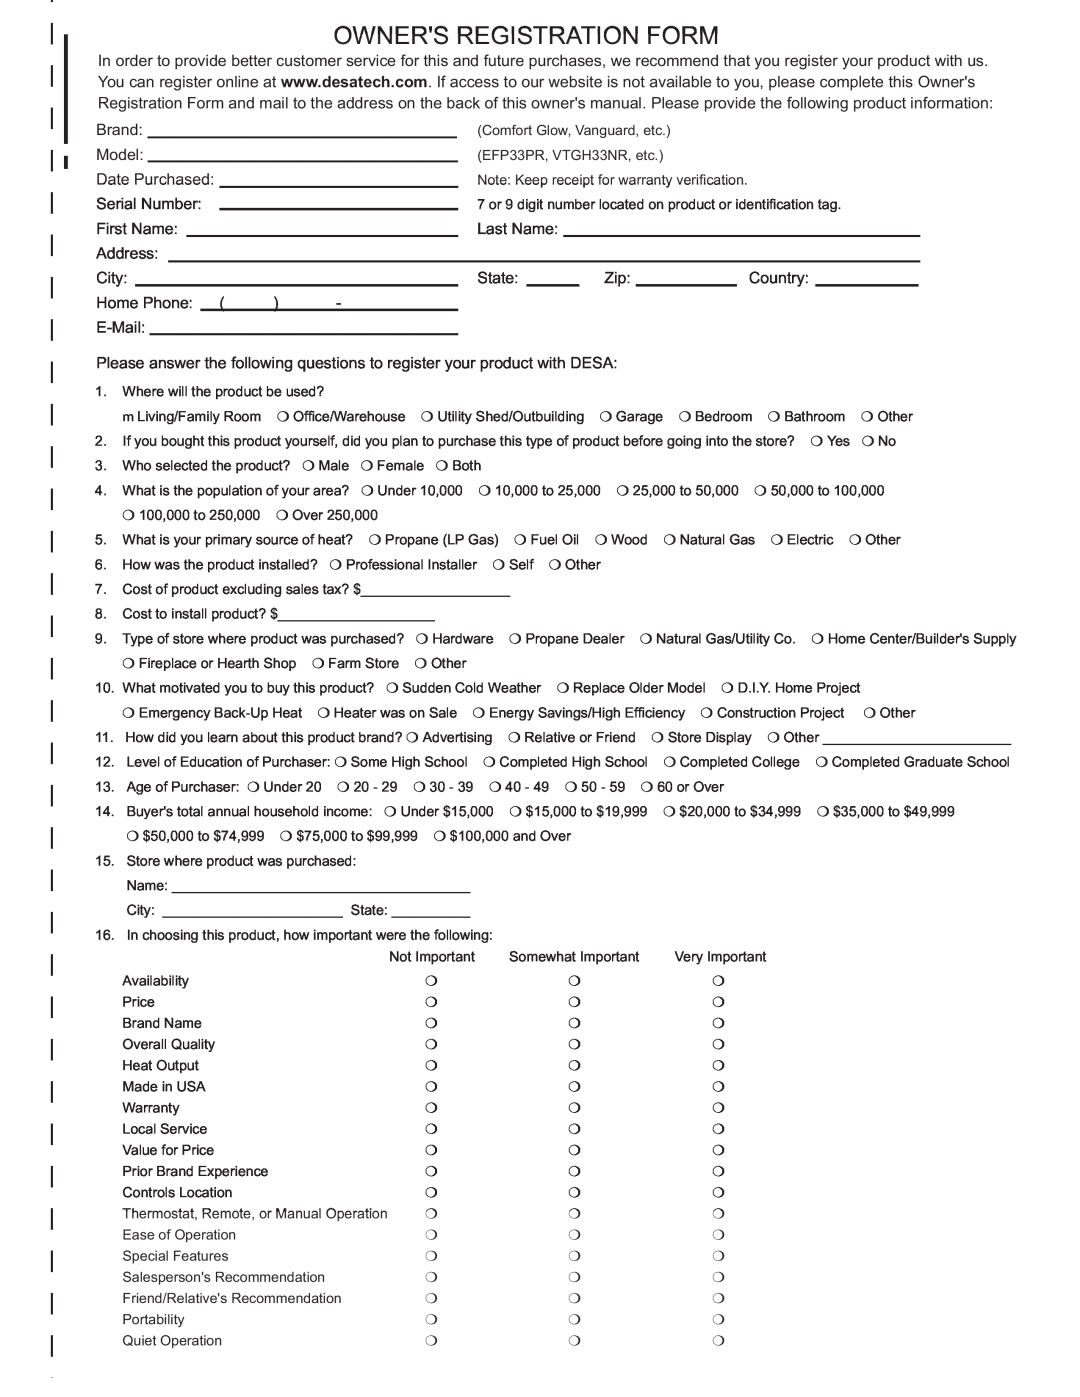 Desa RGA 2-72 installation manual Owners Registration Form 